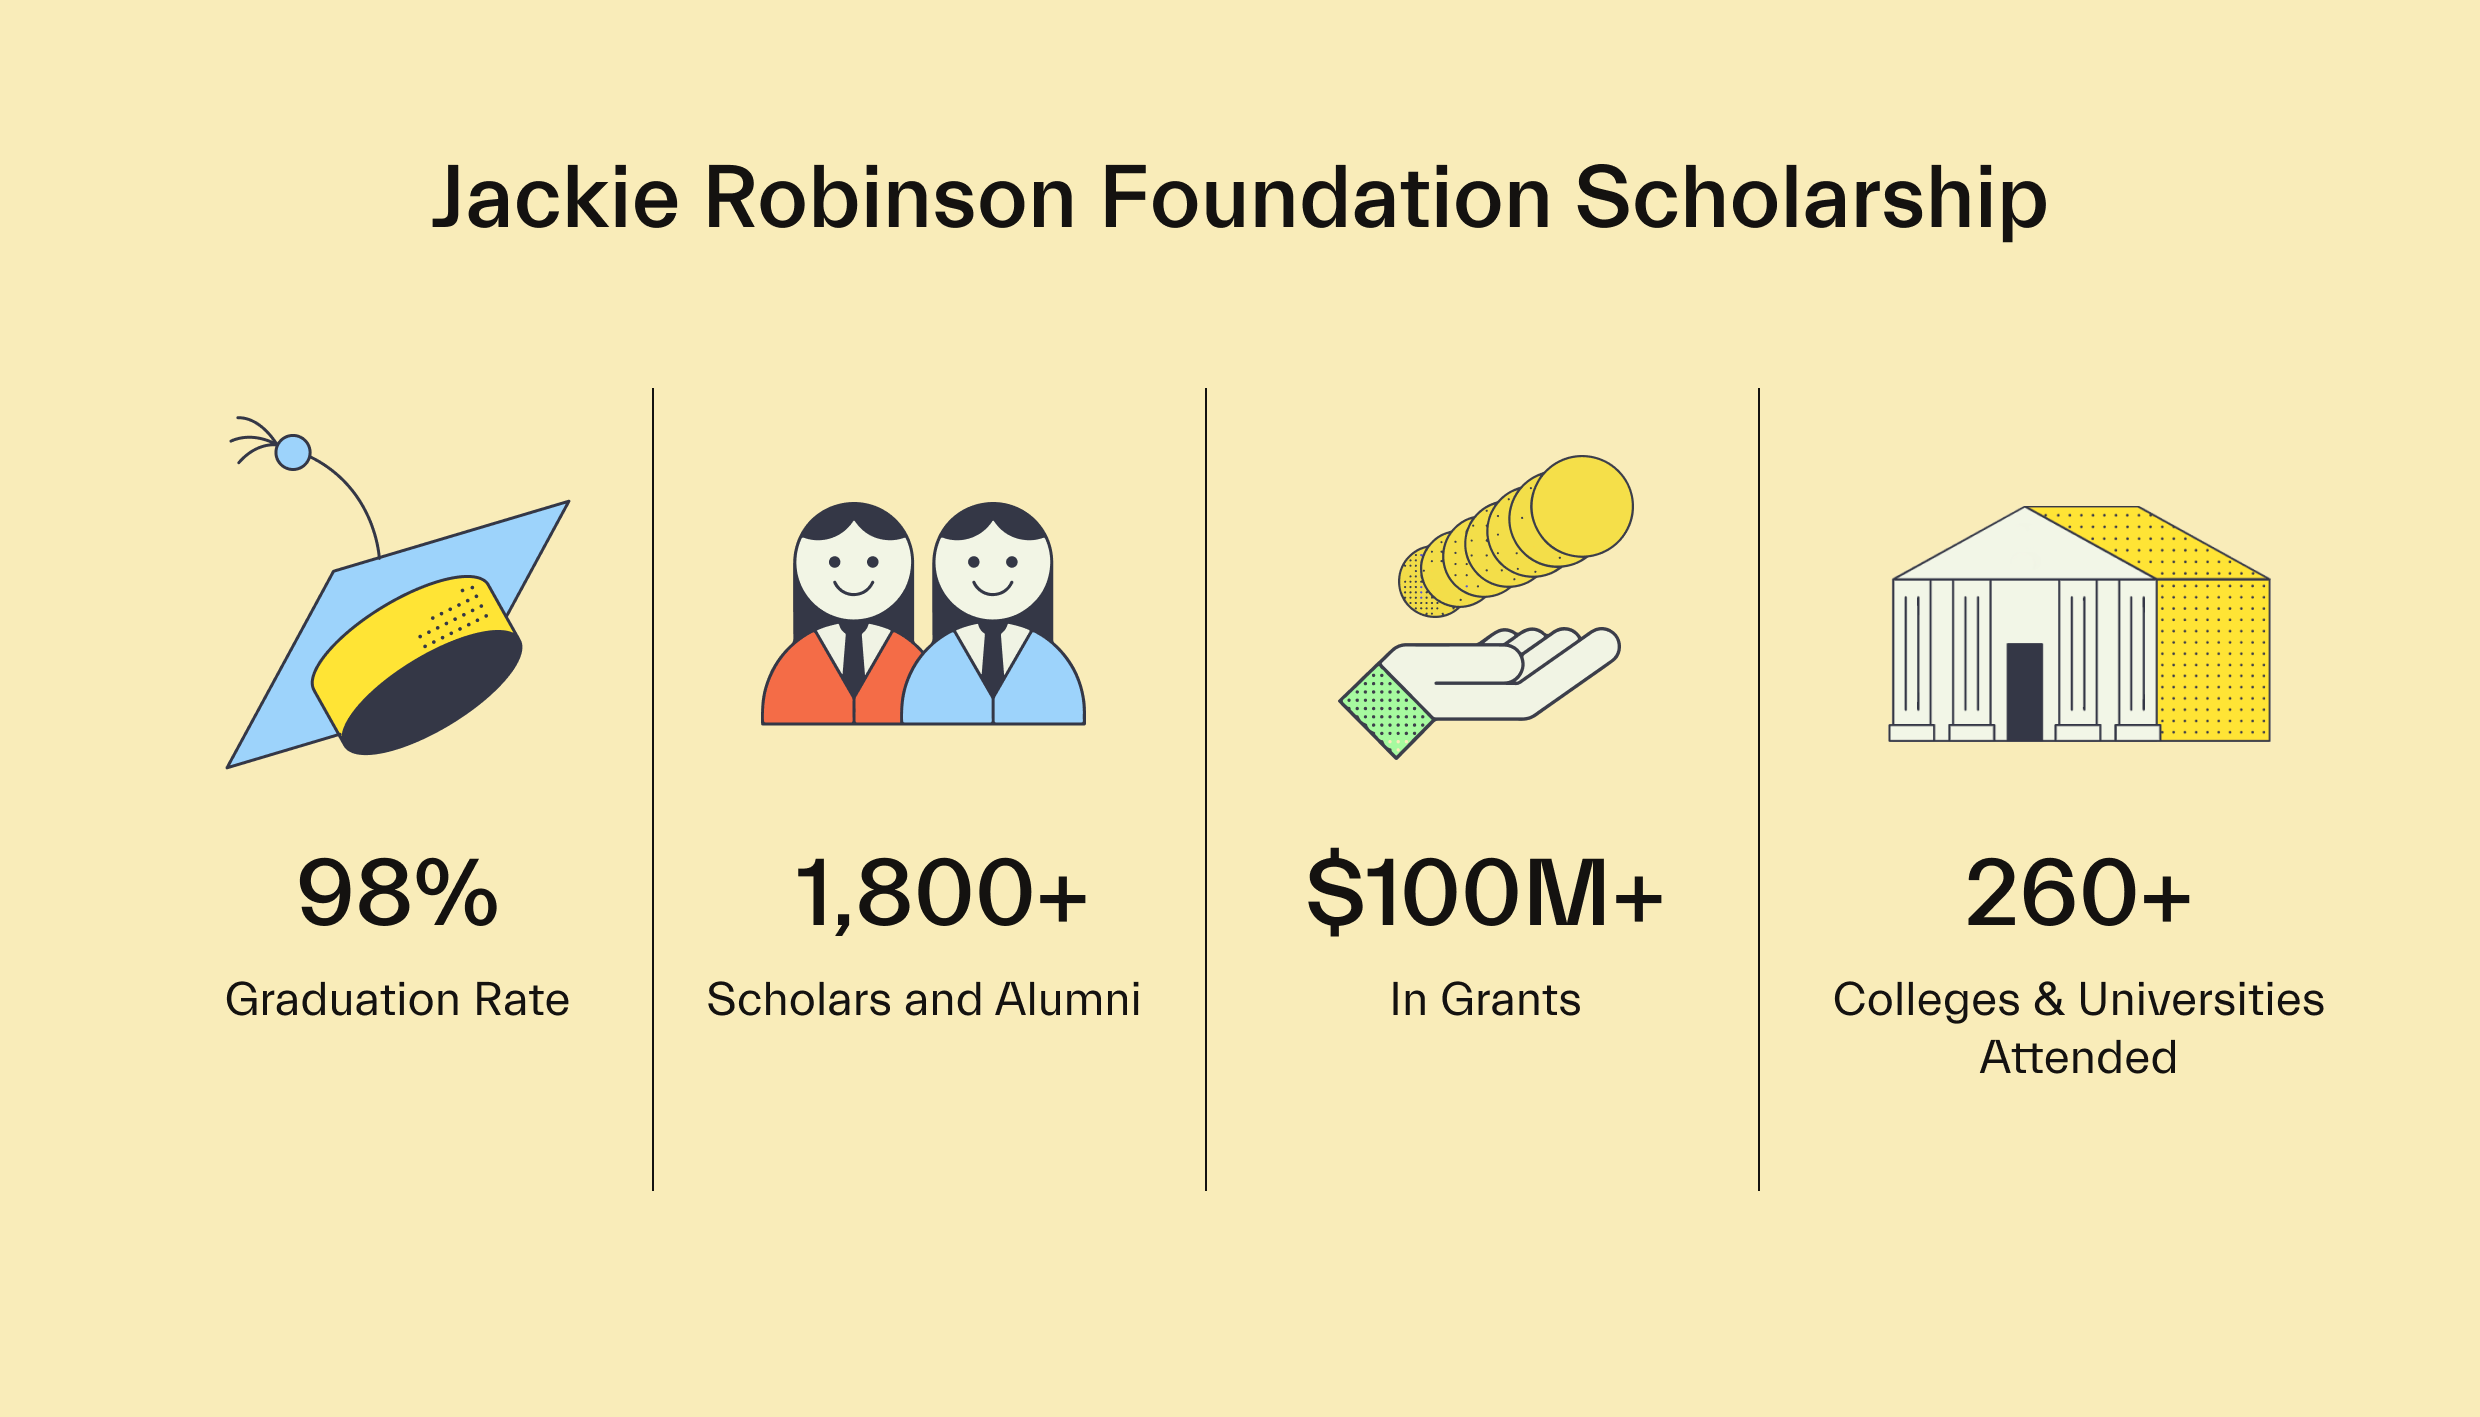 Jackie Robinson - Jackie Robinson Foundation